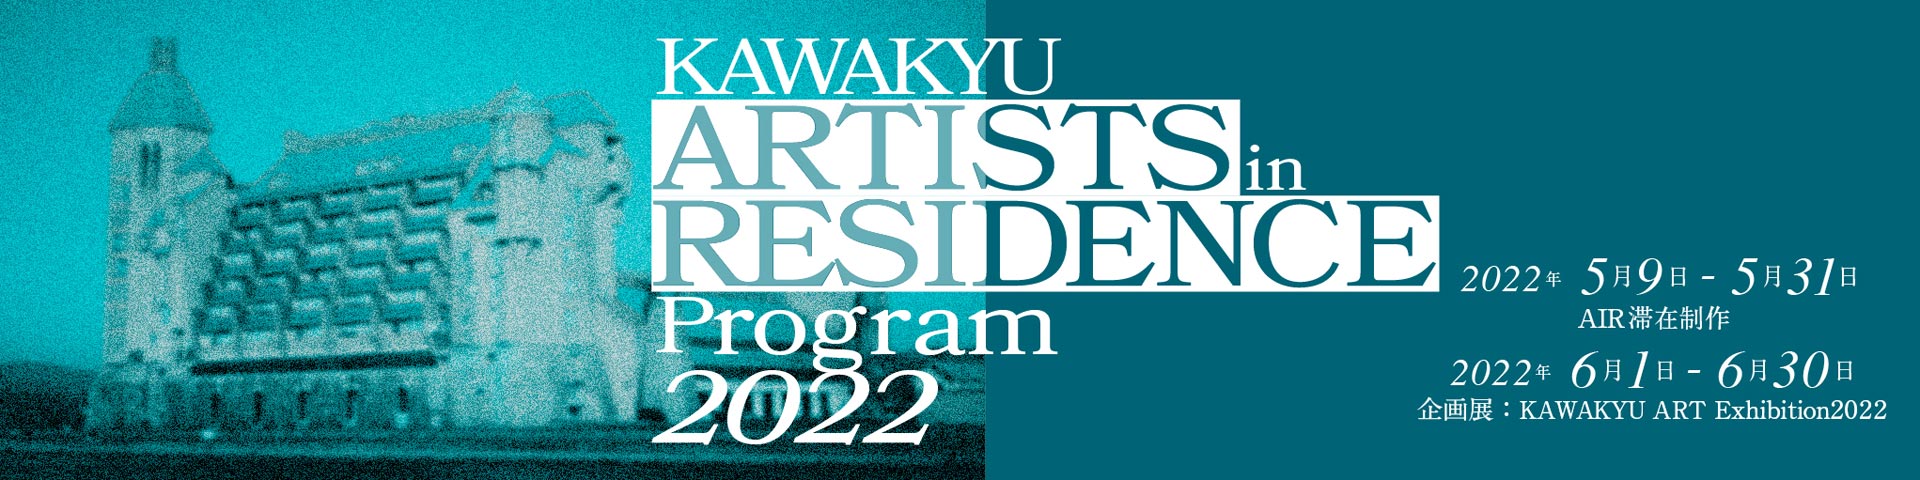 KAWAKYU ARTISTS in RESIDENCE Program 2022